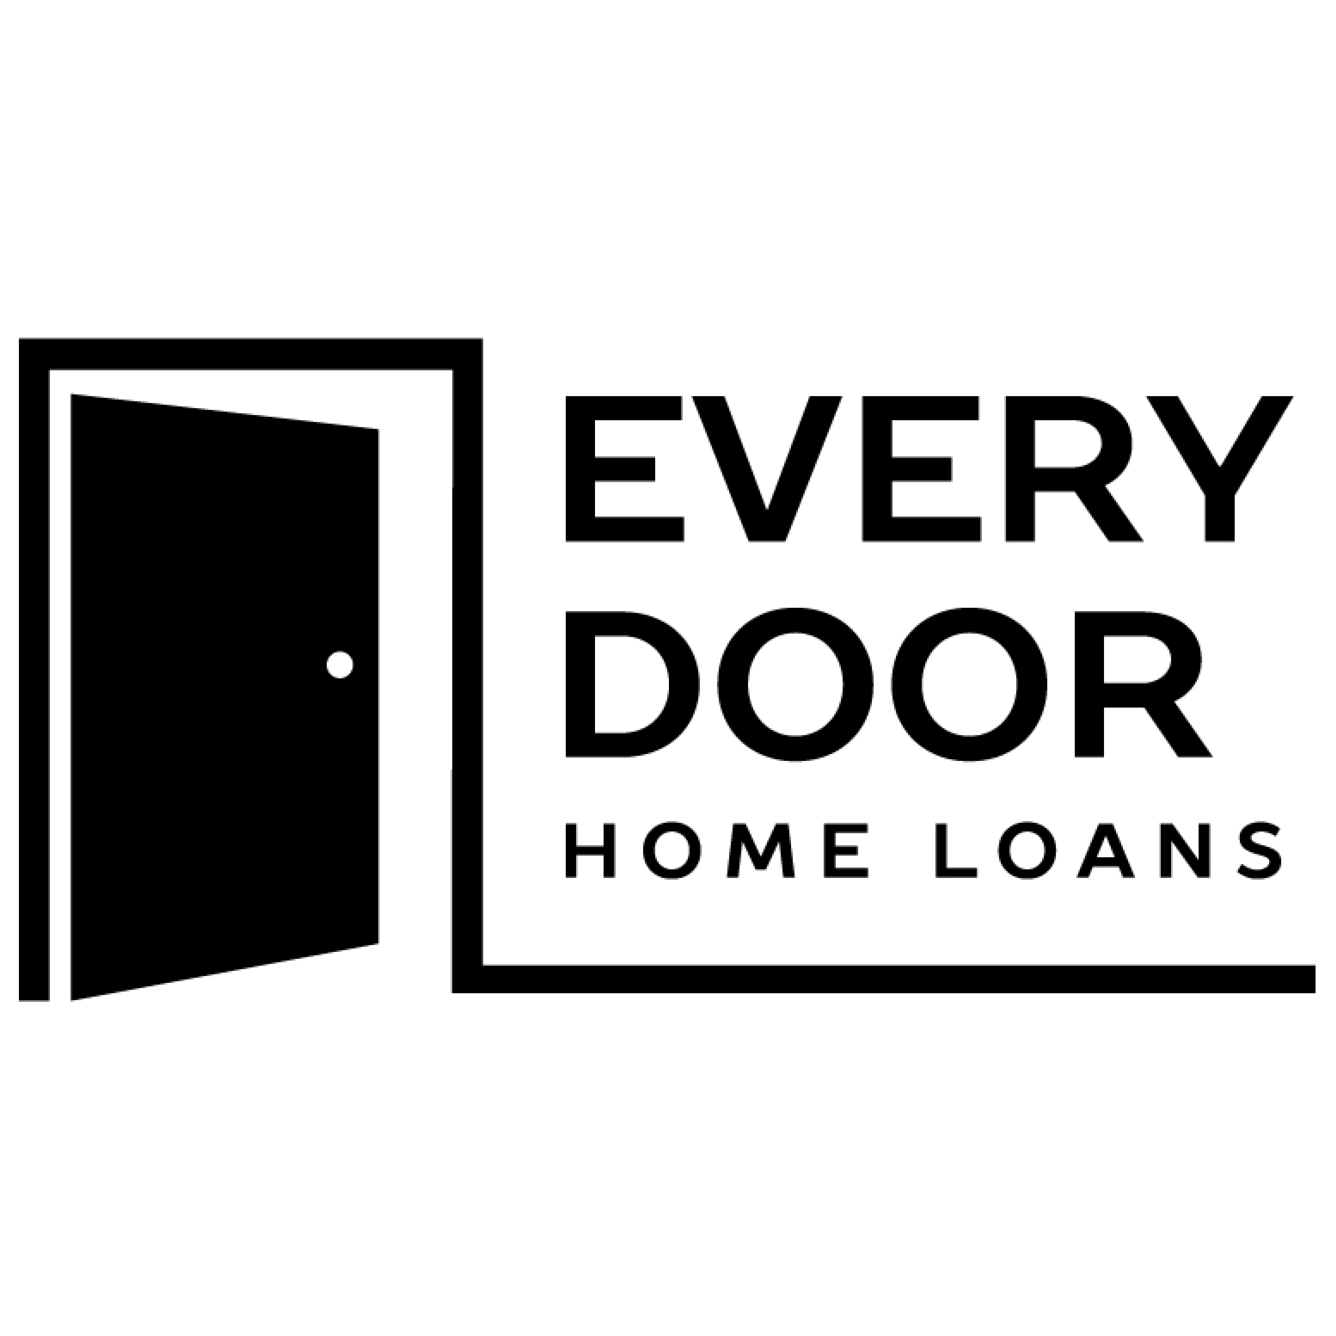 Every Door Home Loans | Chris Butler | Joe Lester